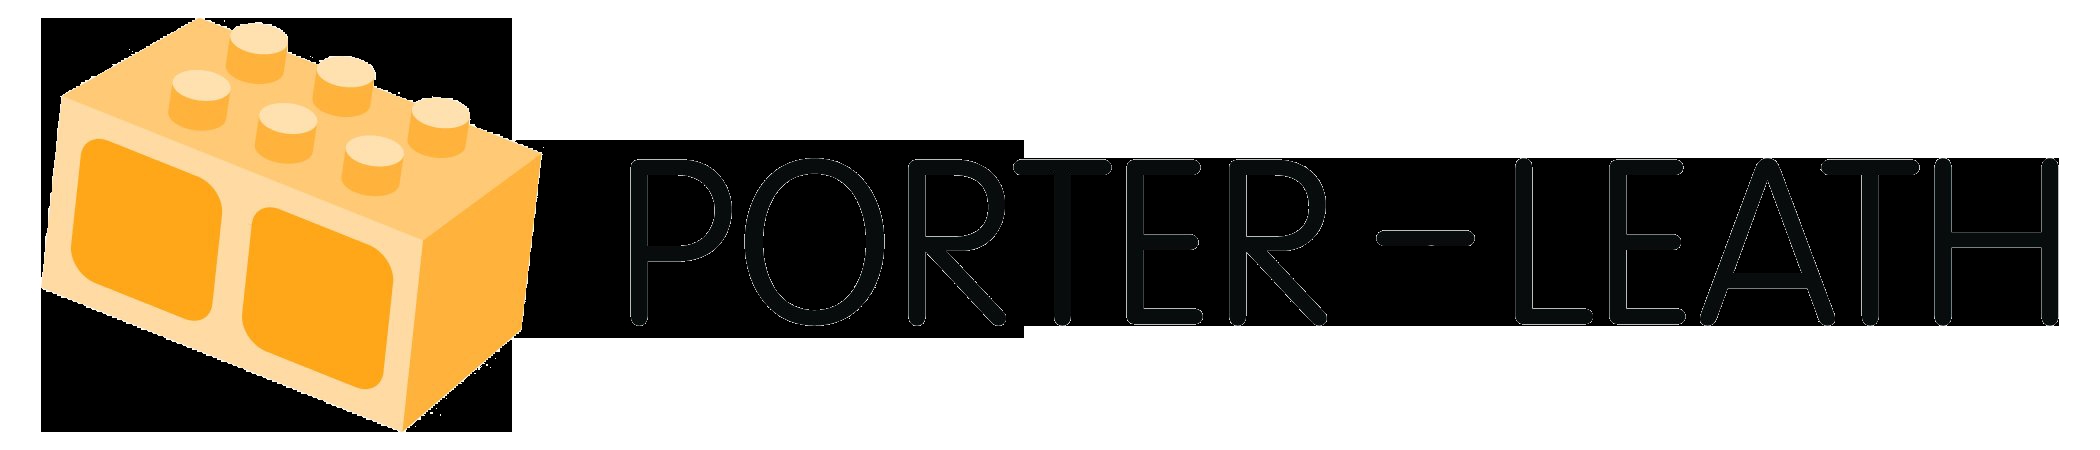 Porter-Leath logo